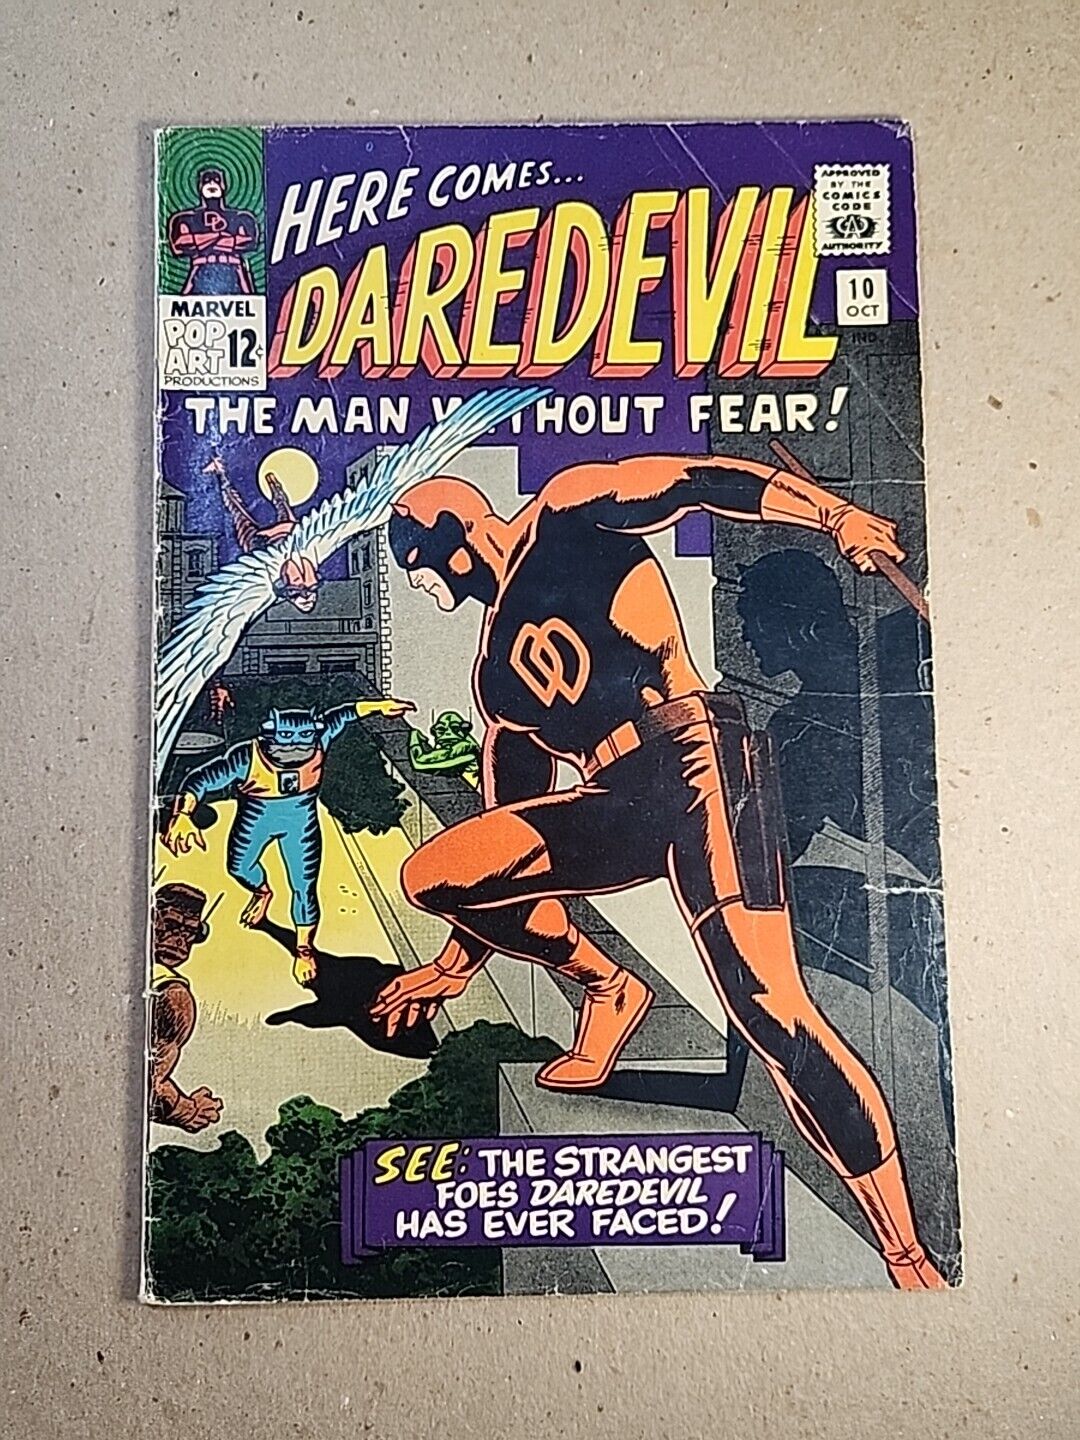 Daredevil #10 (1965) Marvel 1ST ANI-MEN WALLY WOOD STORY/COVER/ART 